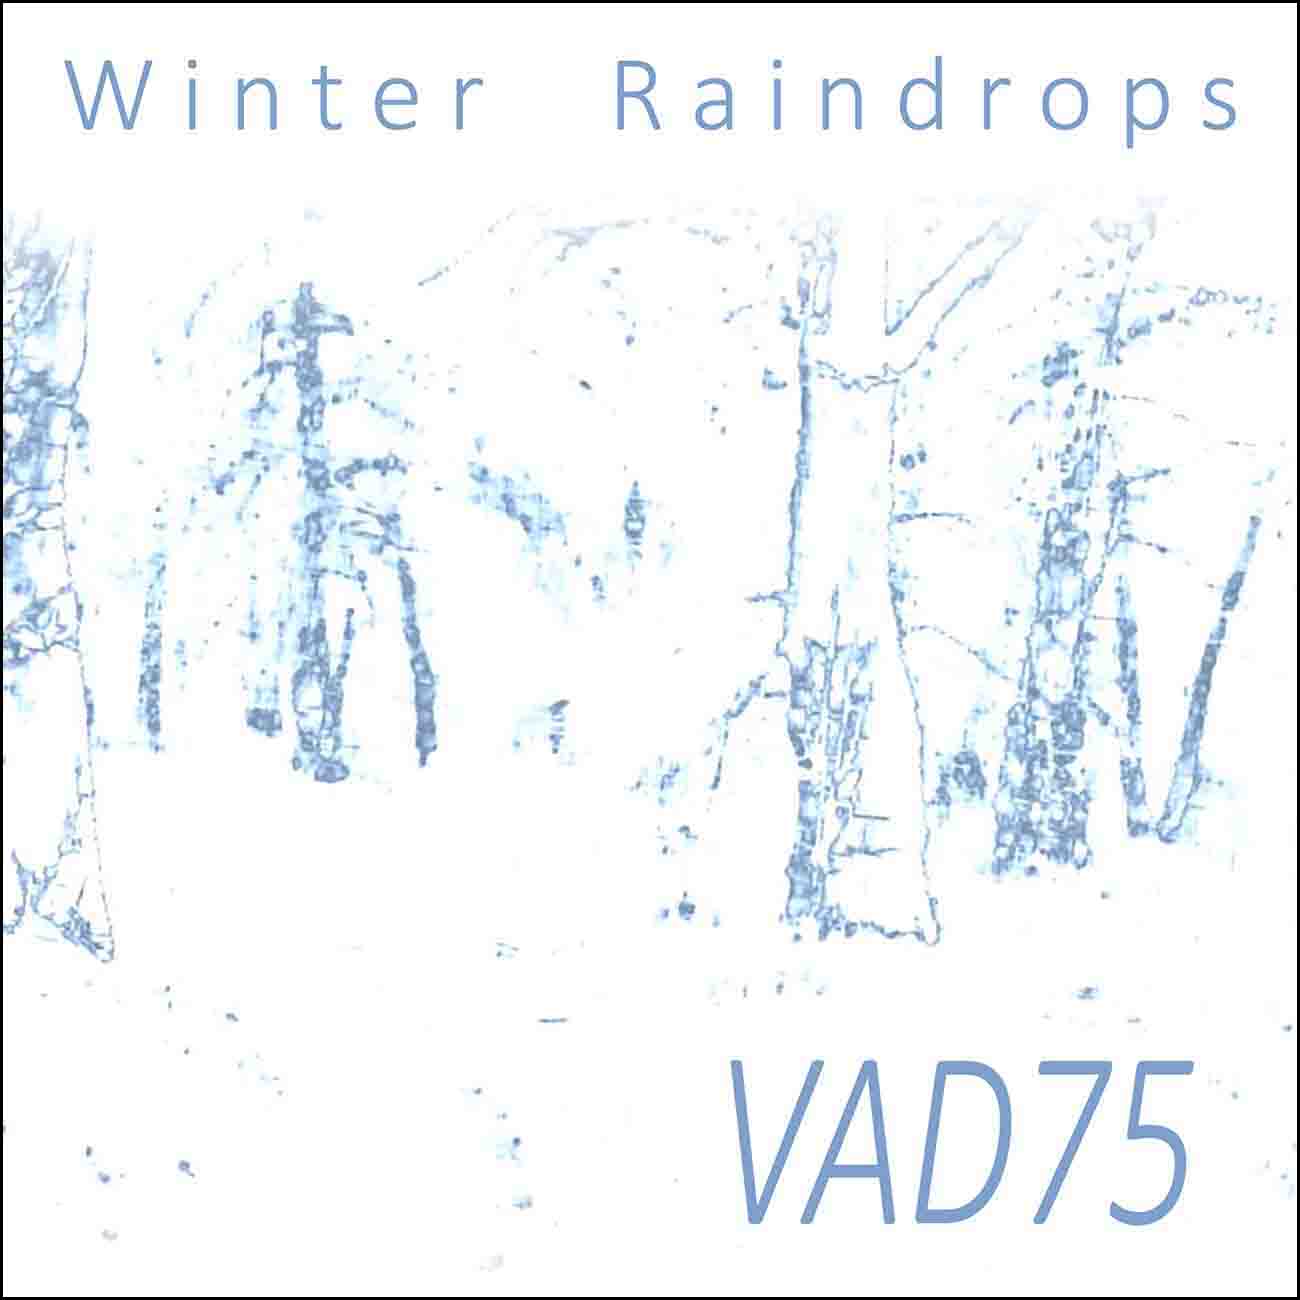 VAD75 - Winter Raindrops